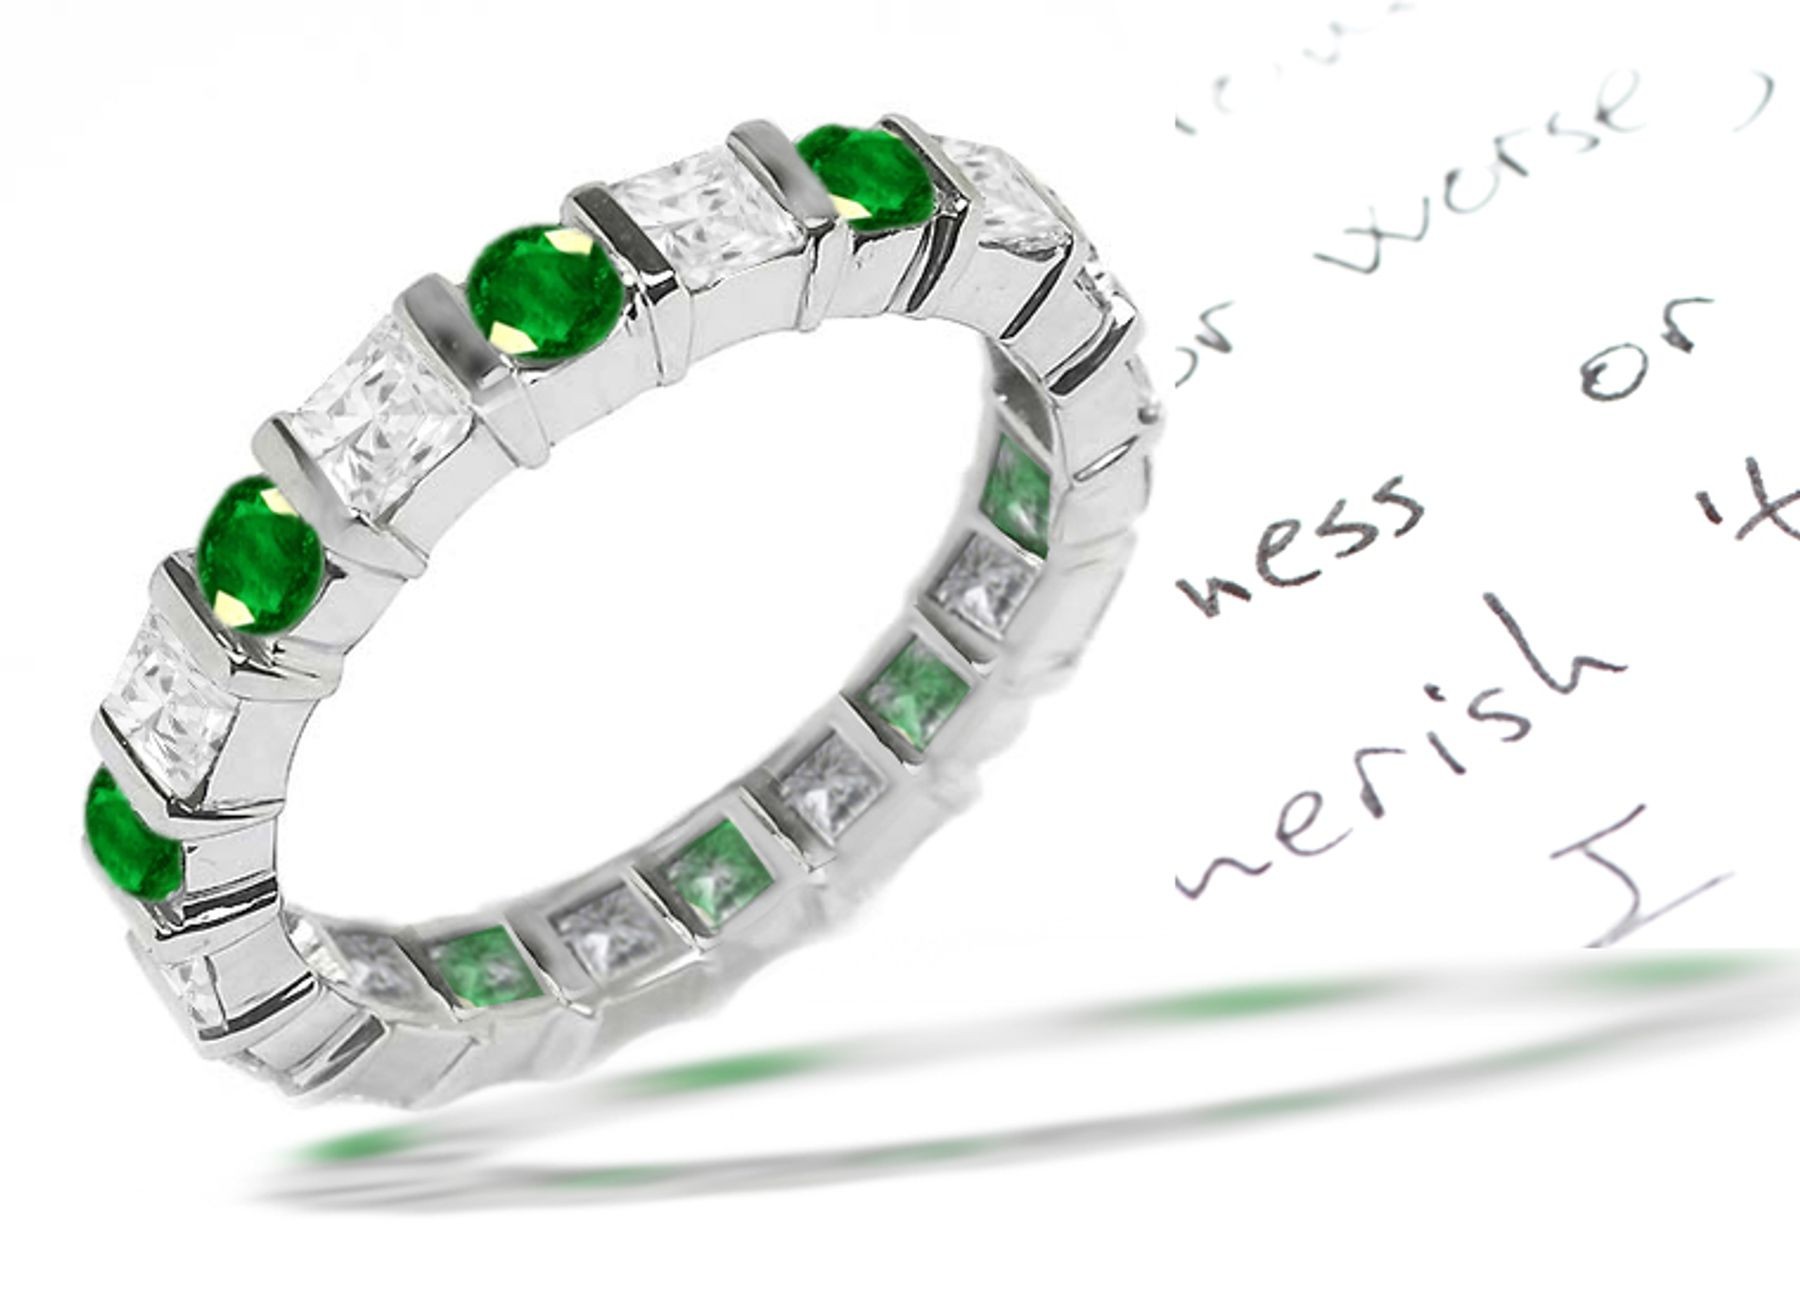 "Elegant & Refined": Gold Princess Cut Diamond & Emerald Eternity Ring wuth Green Darker in Proportion